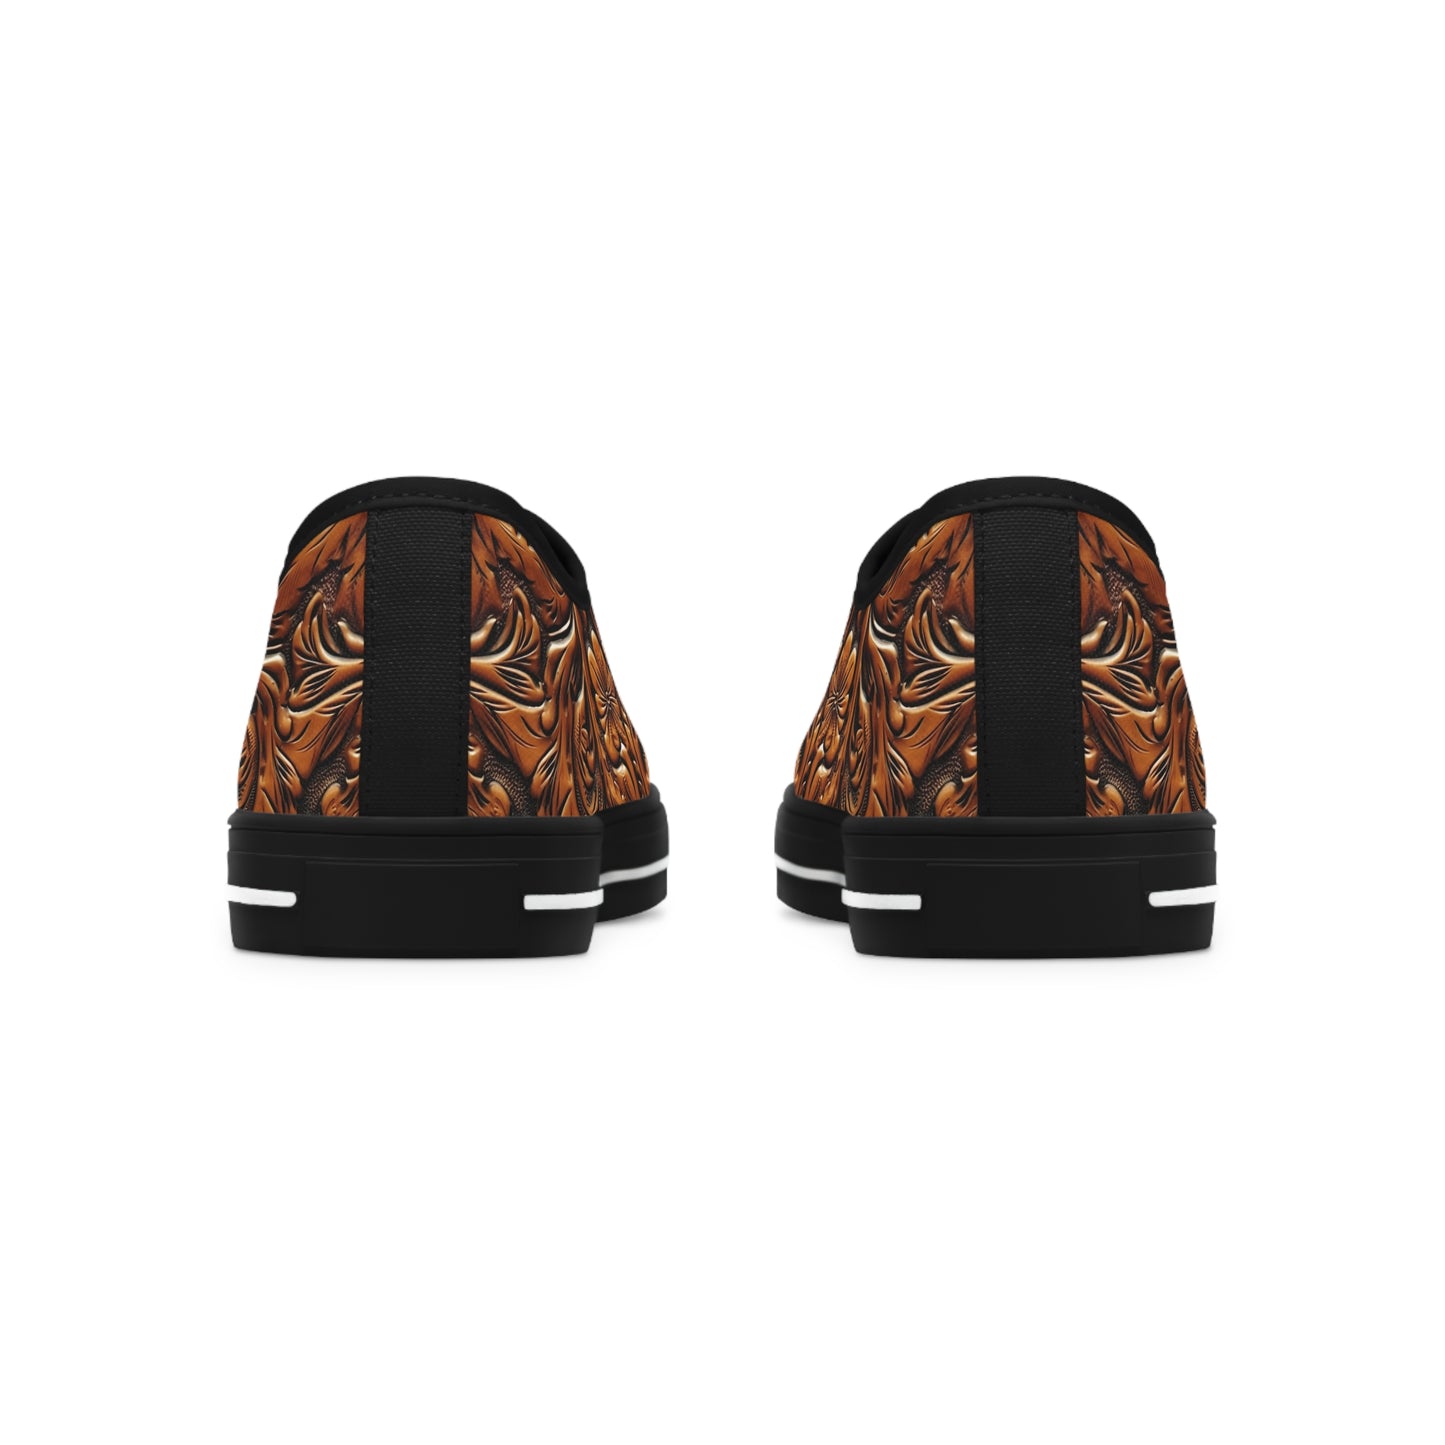 Tooled Leather Women's Low-Top Sneakers (Black) by Studio Ten Design